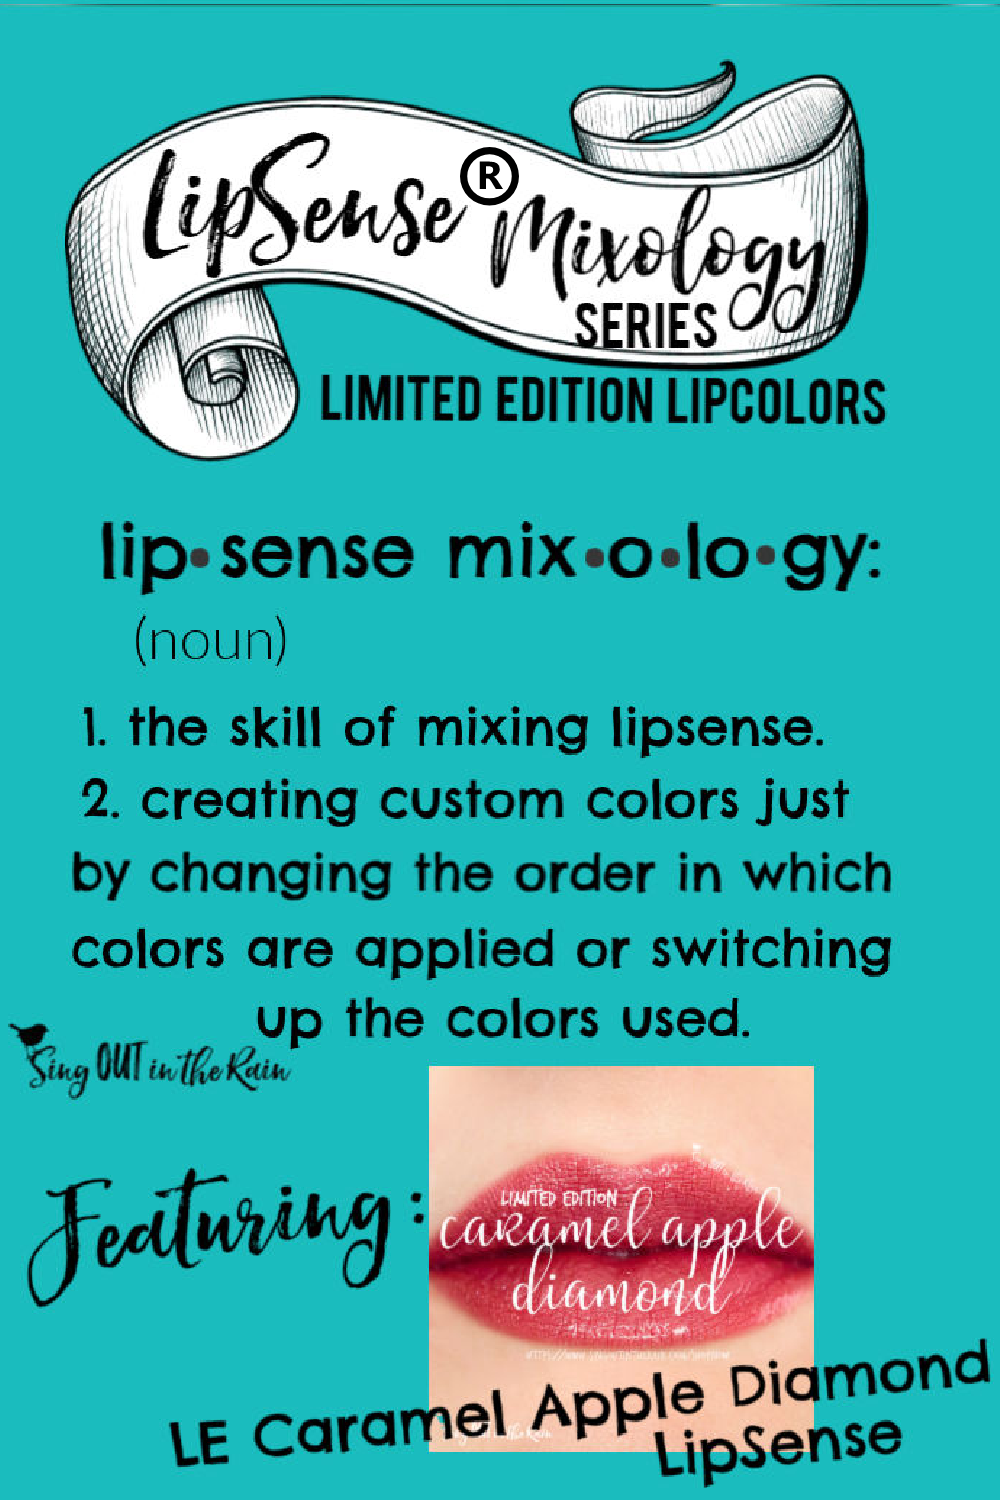 The Ultimate Guide to Caramel Apple Diamond LipSense Mixology